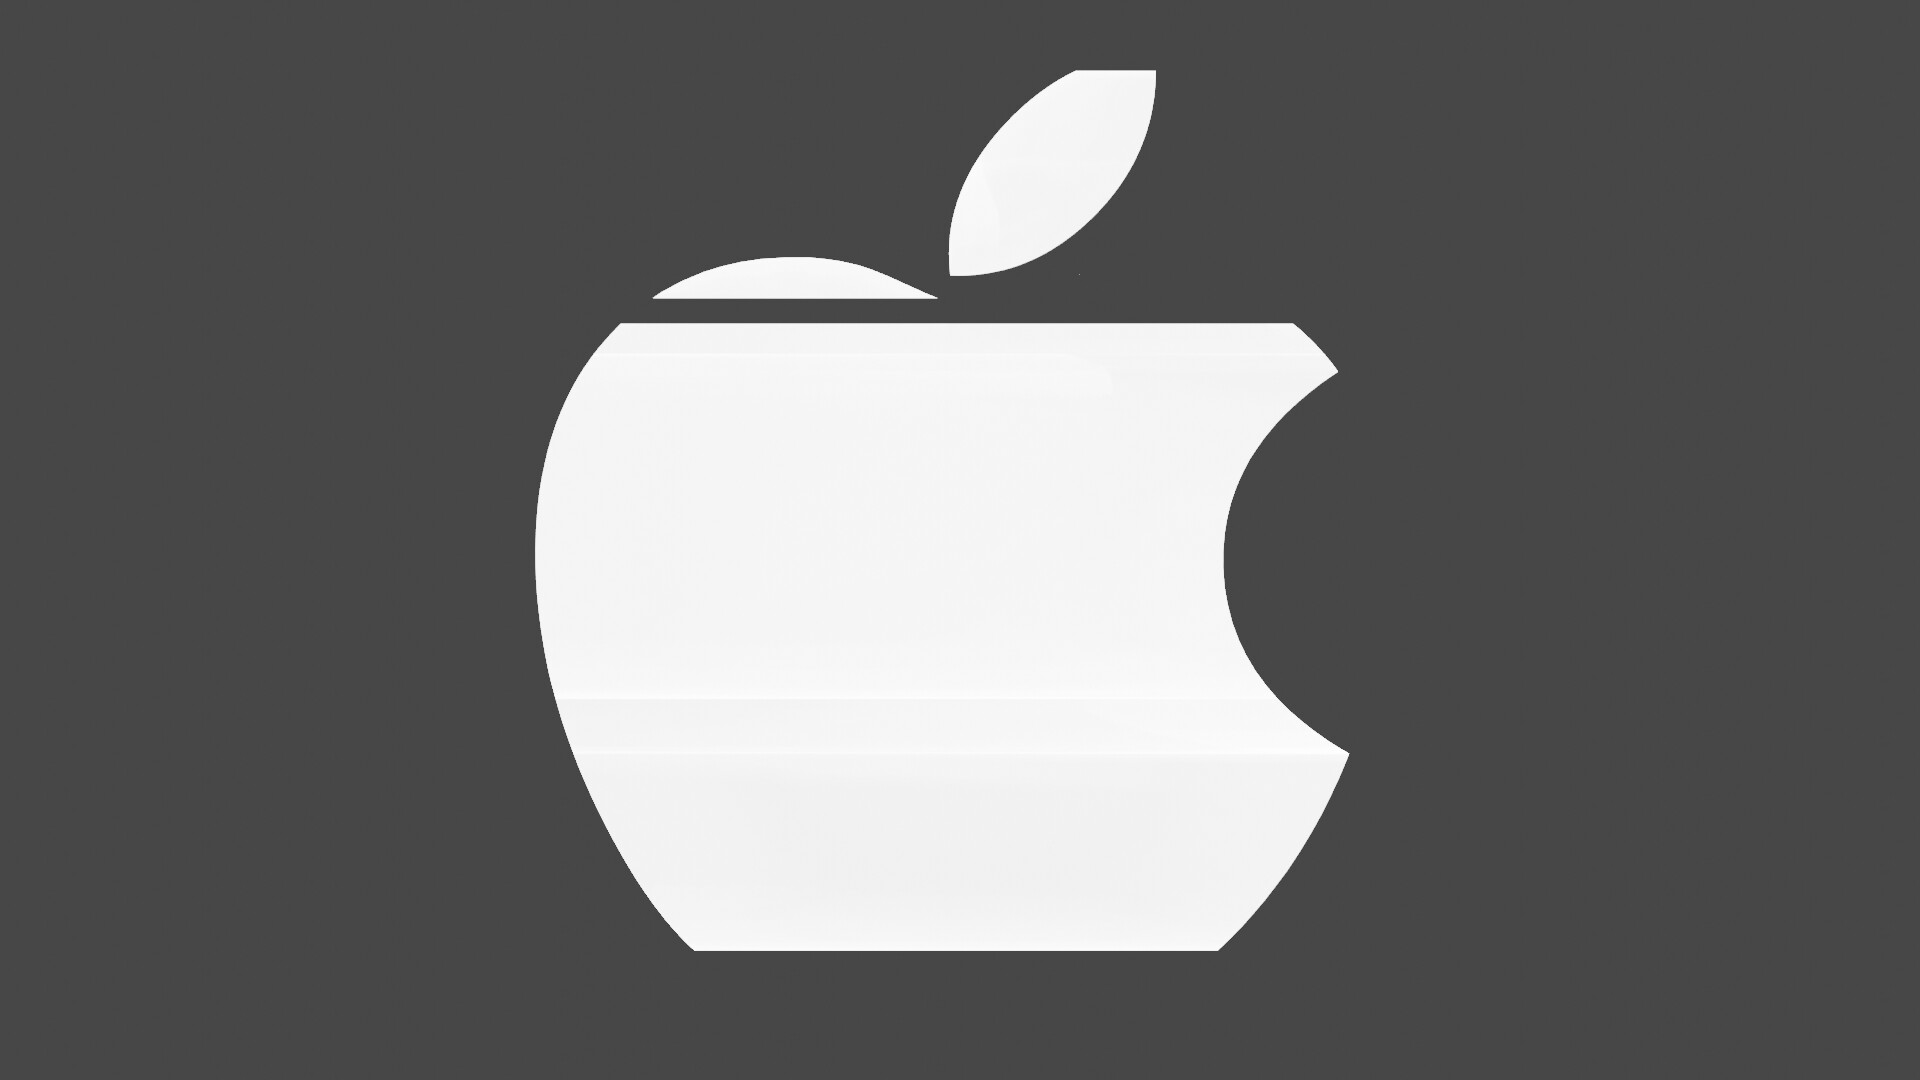 Download Black And White Best Apple Logo 3d Art Wallpaper | Wallpapers.com